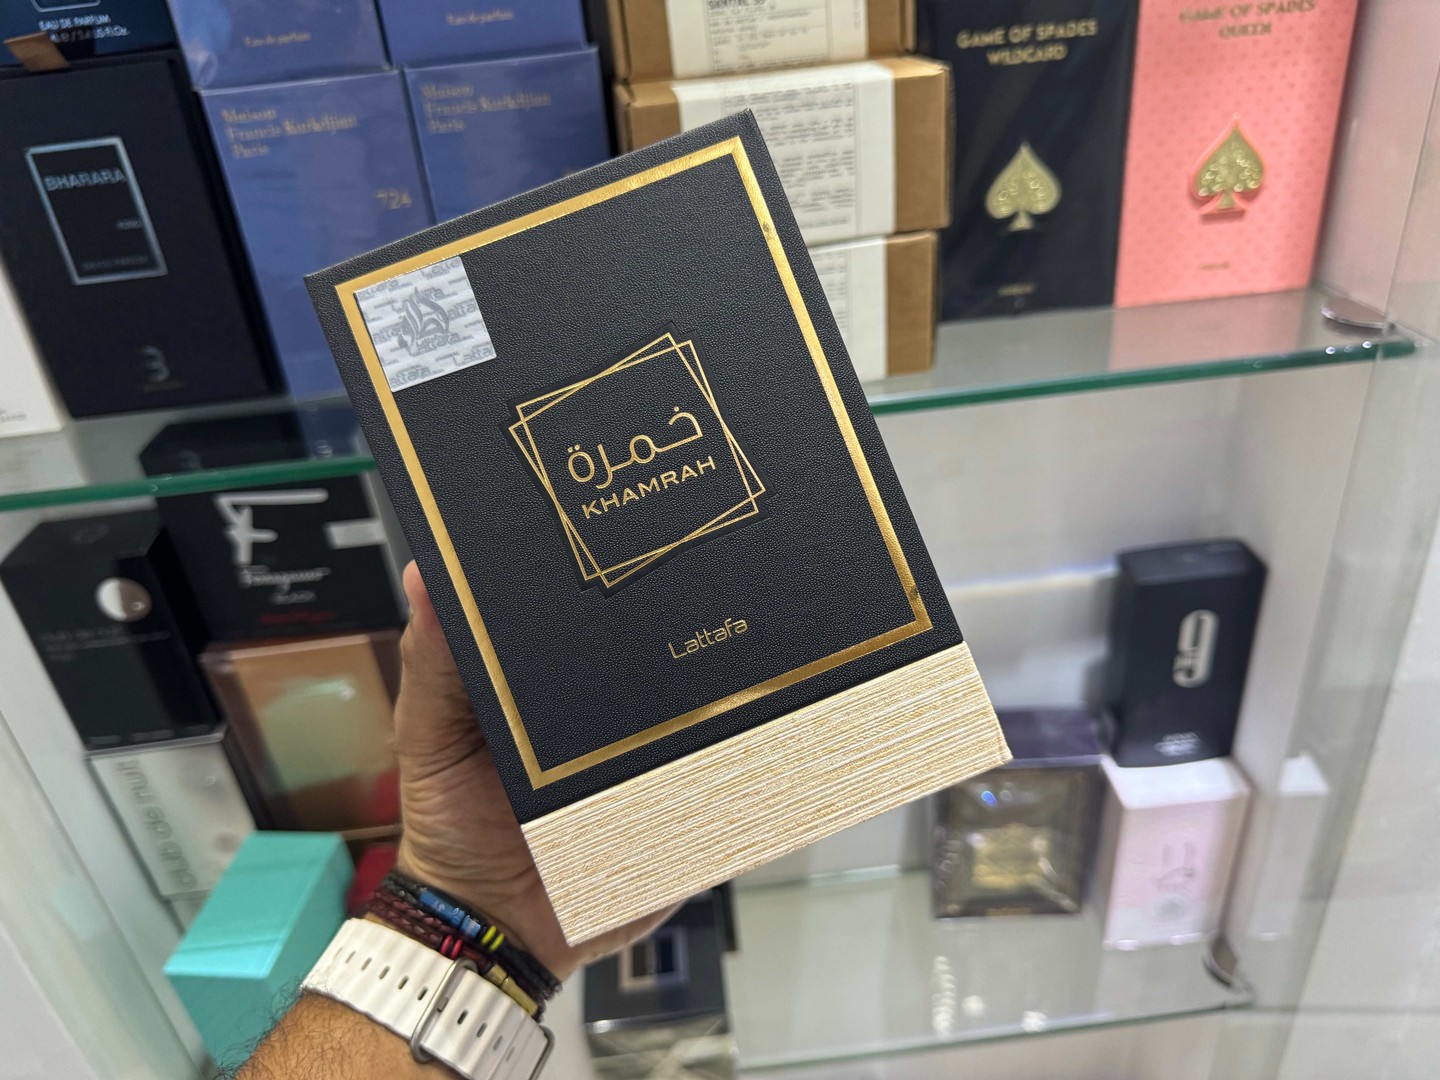 joyas, relojes y accesorios - Perfume KHAMRAH Lattafa 100ML o 3.4OZFL Nuevo, Original , RD$ 4,500 NEG